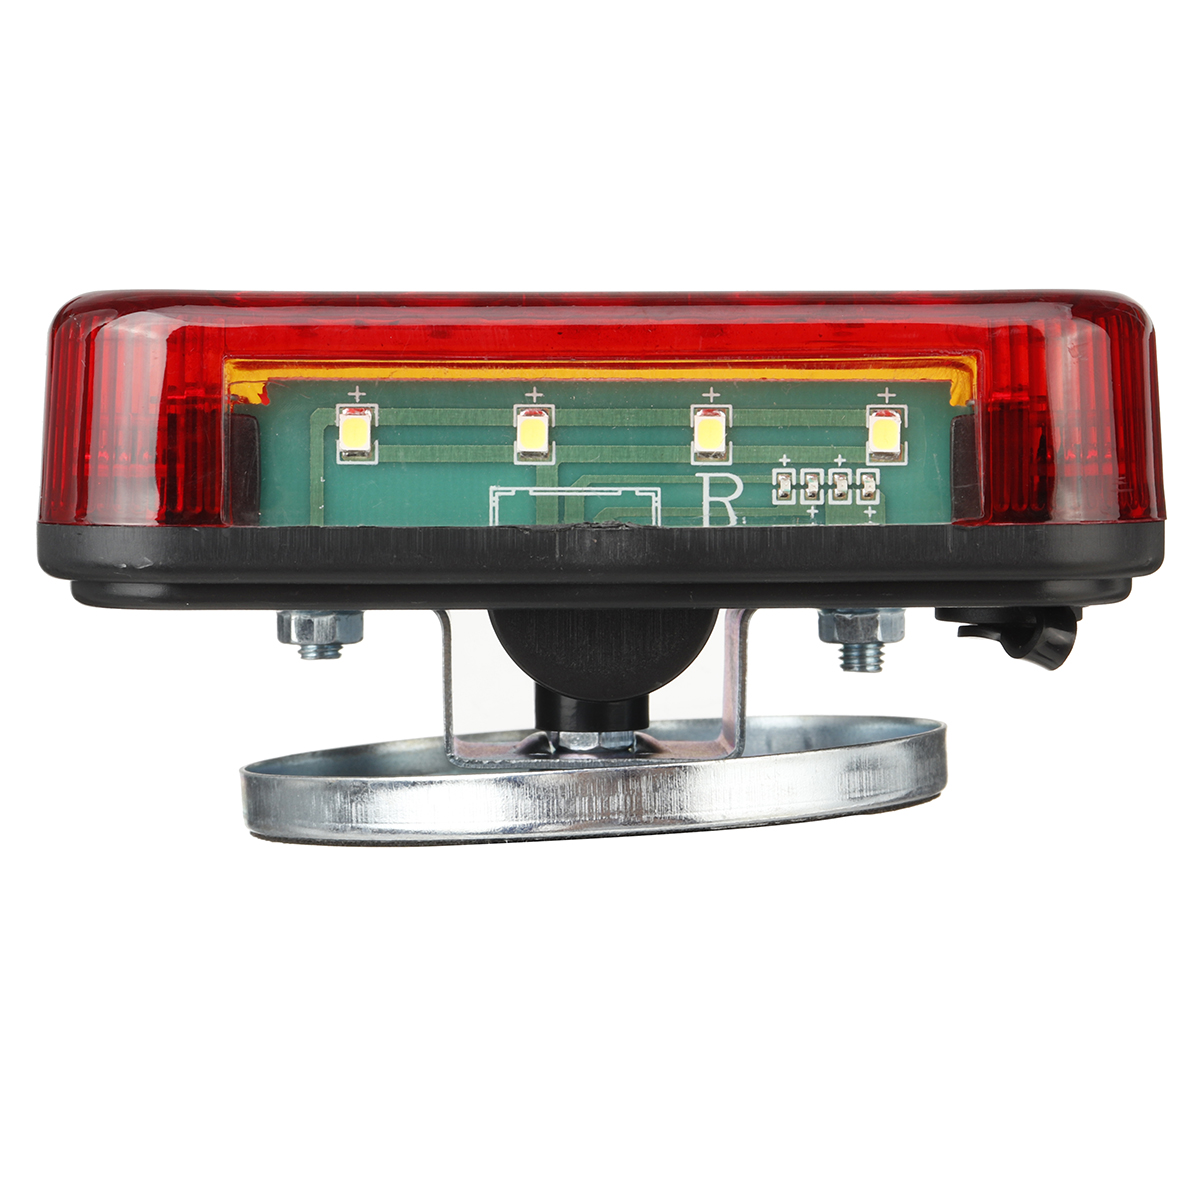 2Pcs Magnetic LED Wireless Tail Light Rear Warning Brake Lamp for Truck Towing Trailer Tractor Caravan Marine Boat